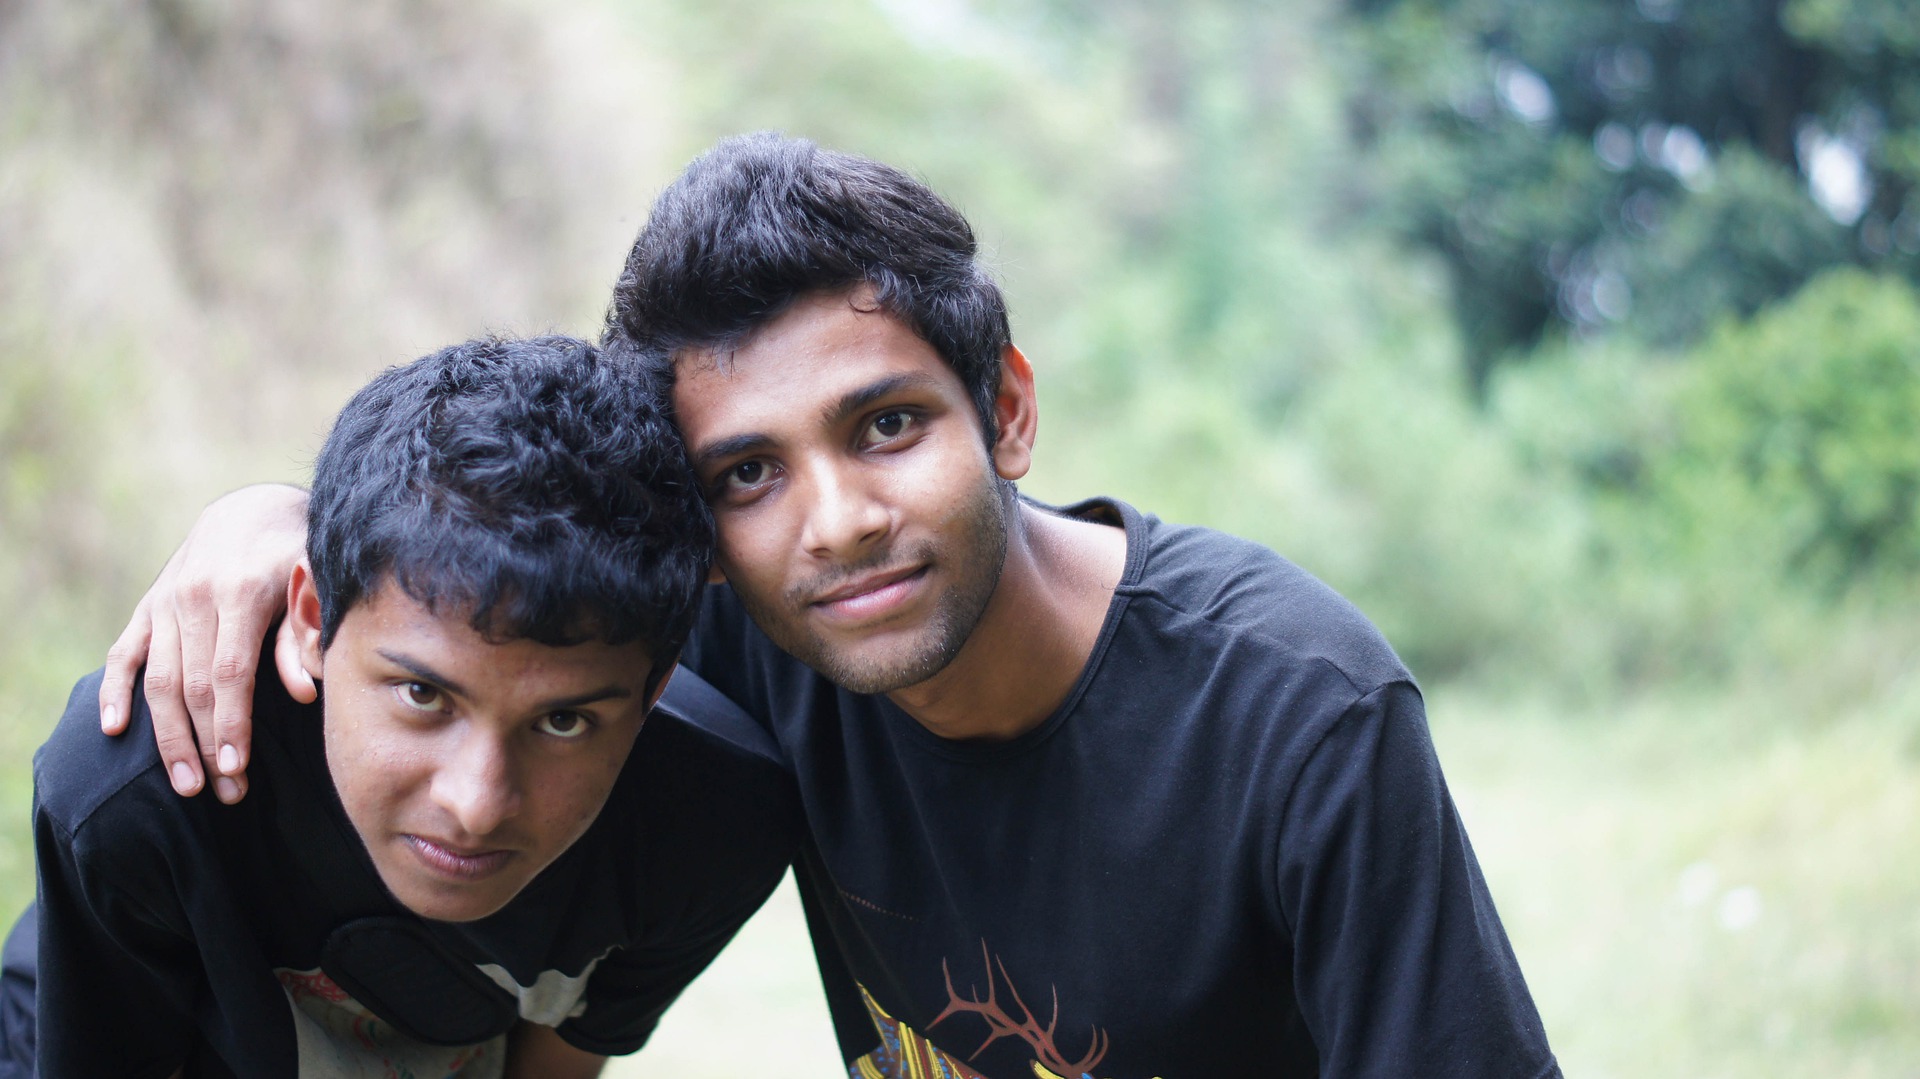 Young men image by Vishva Navanjana from Pixabay .jpg